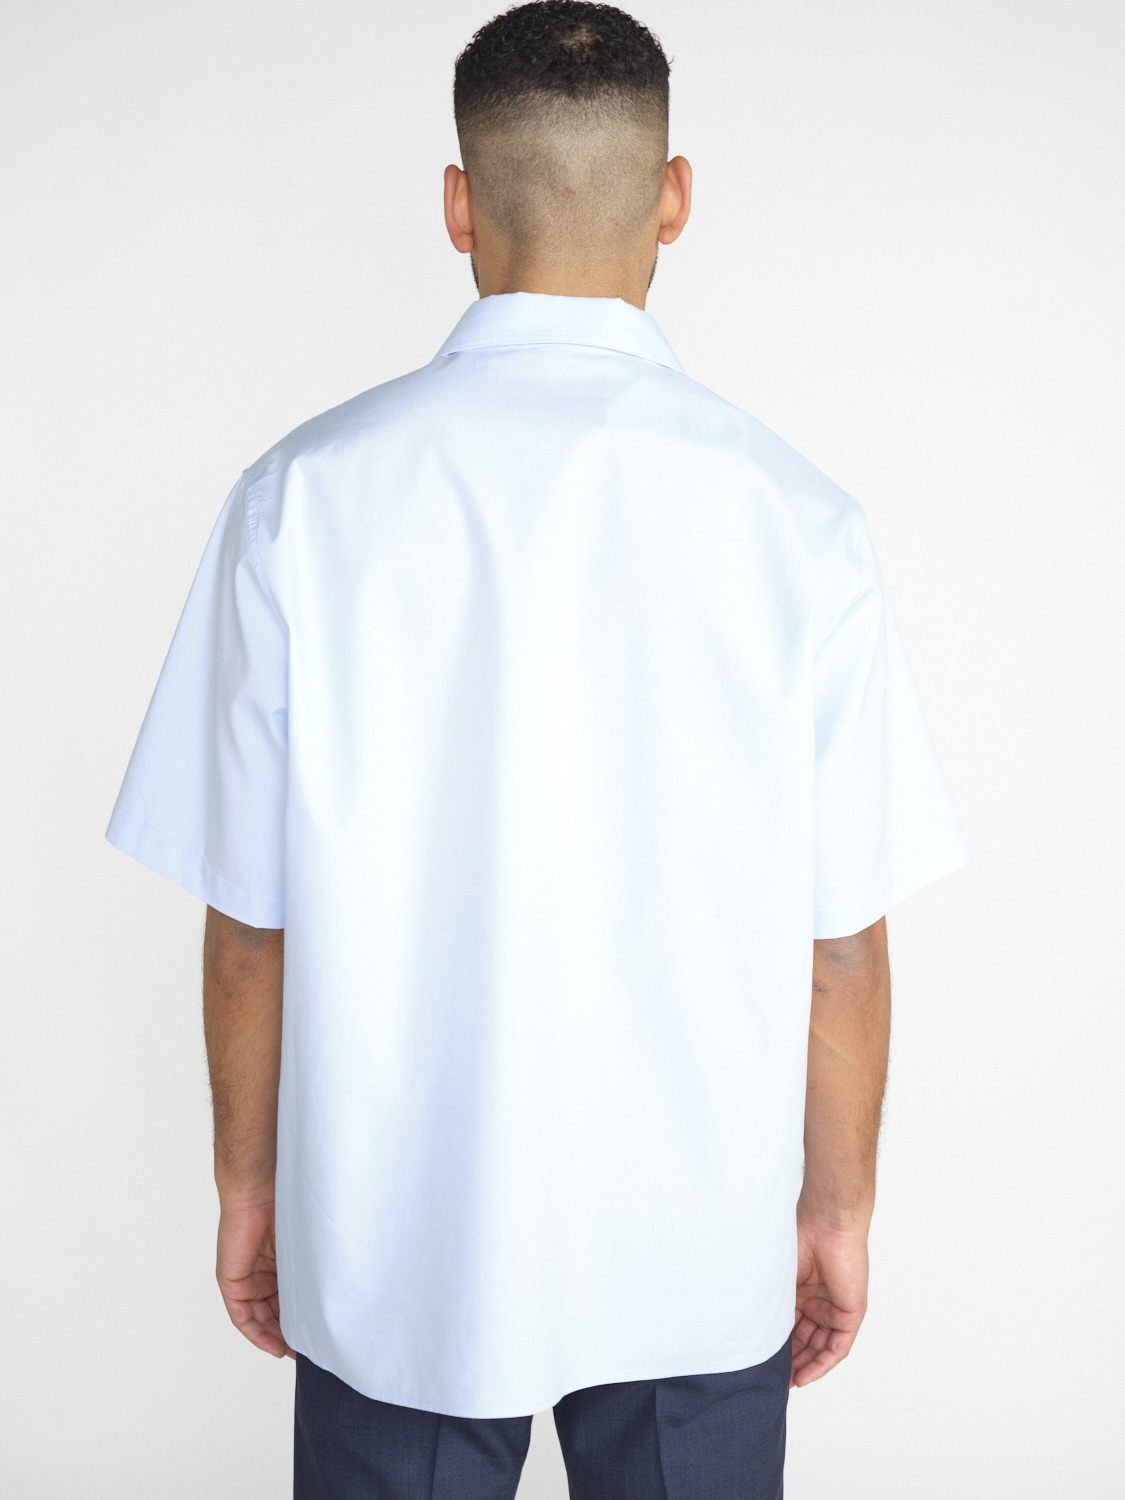 Darkpark Valle - Short-sleeved cotton shirt  blue S